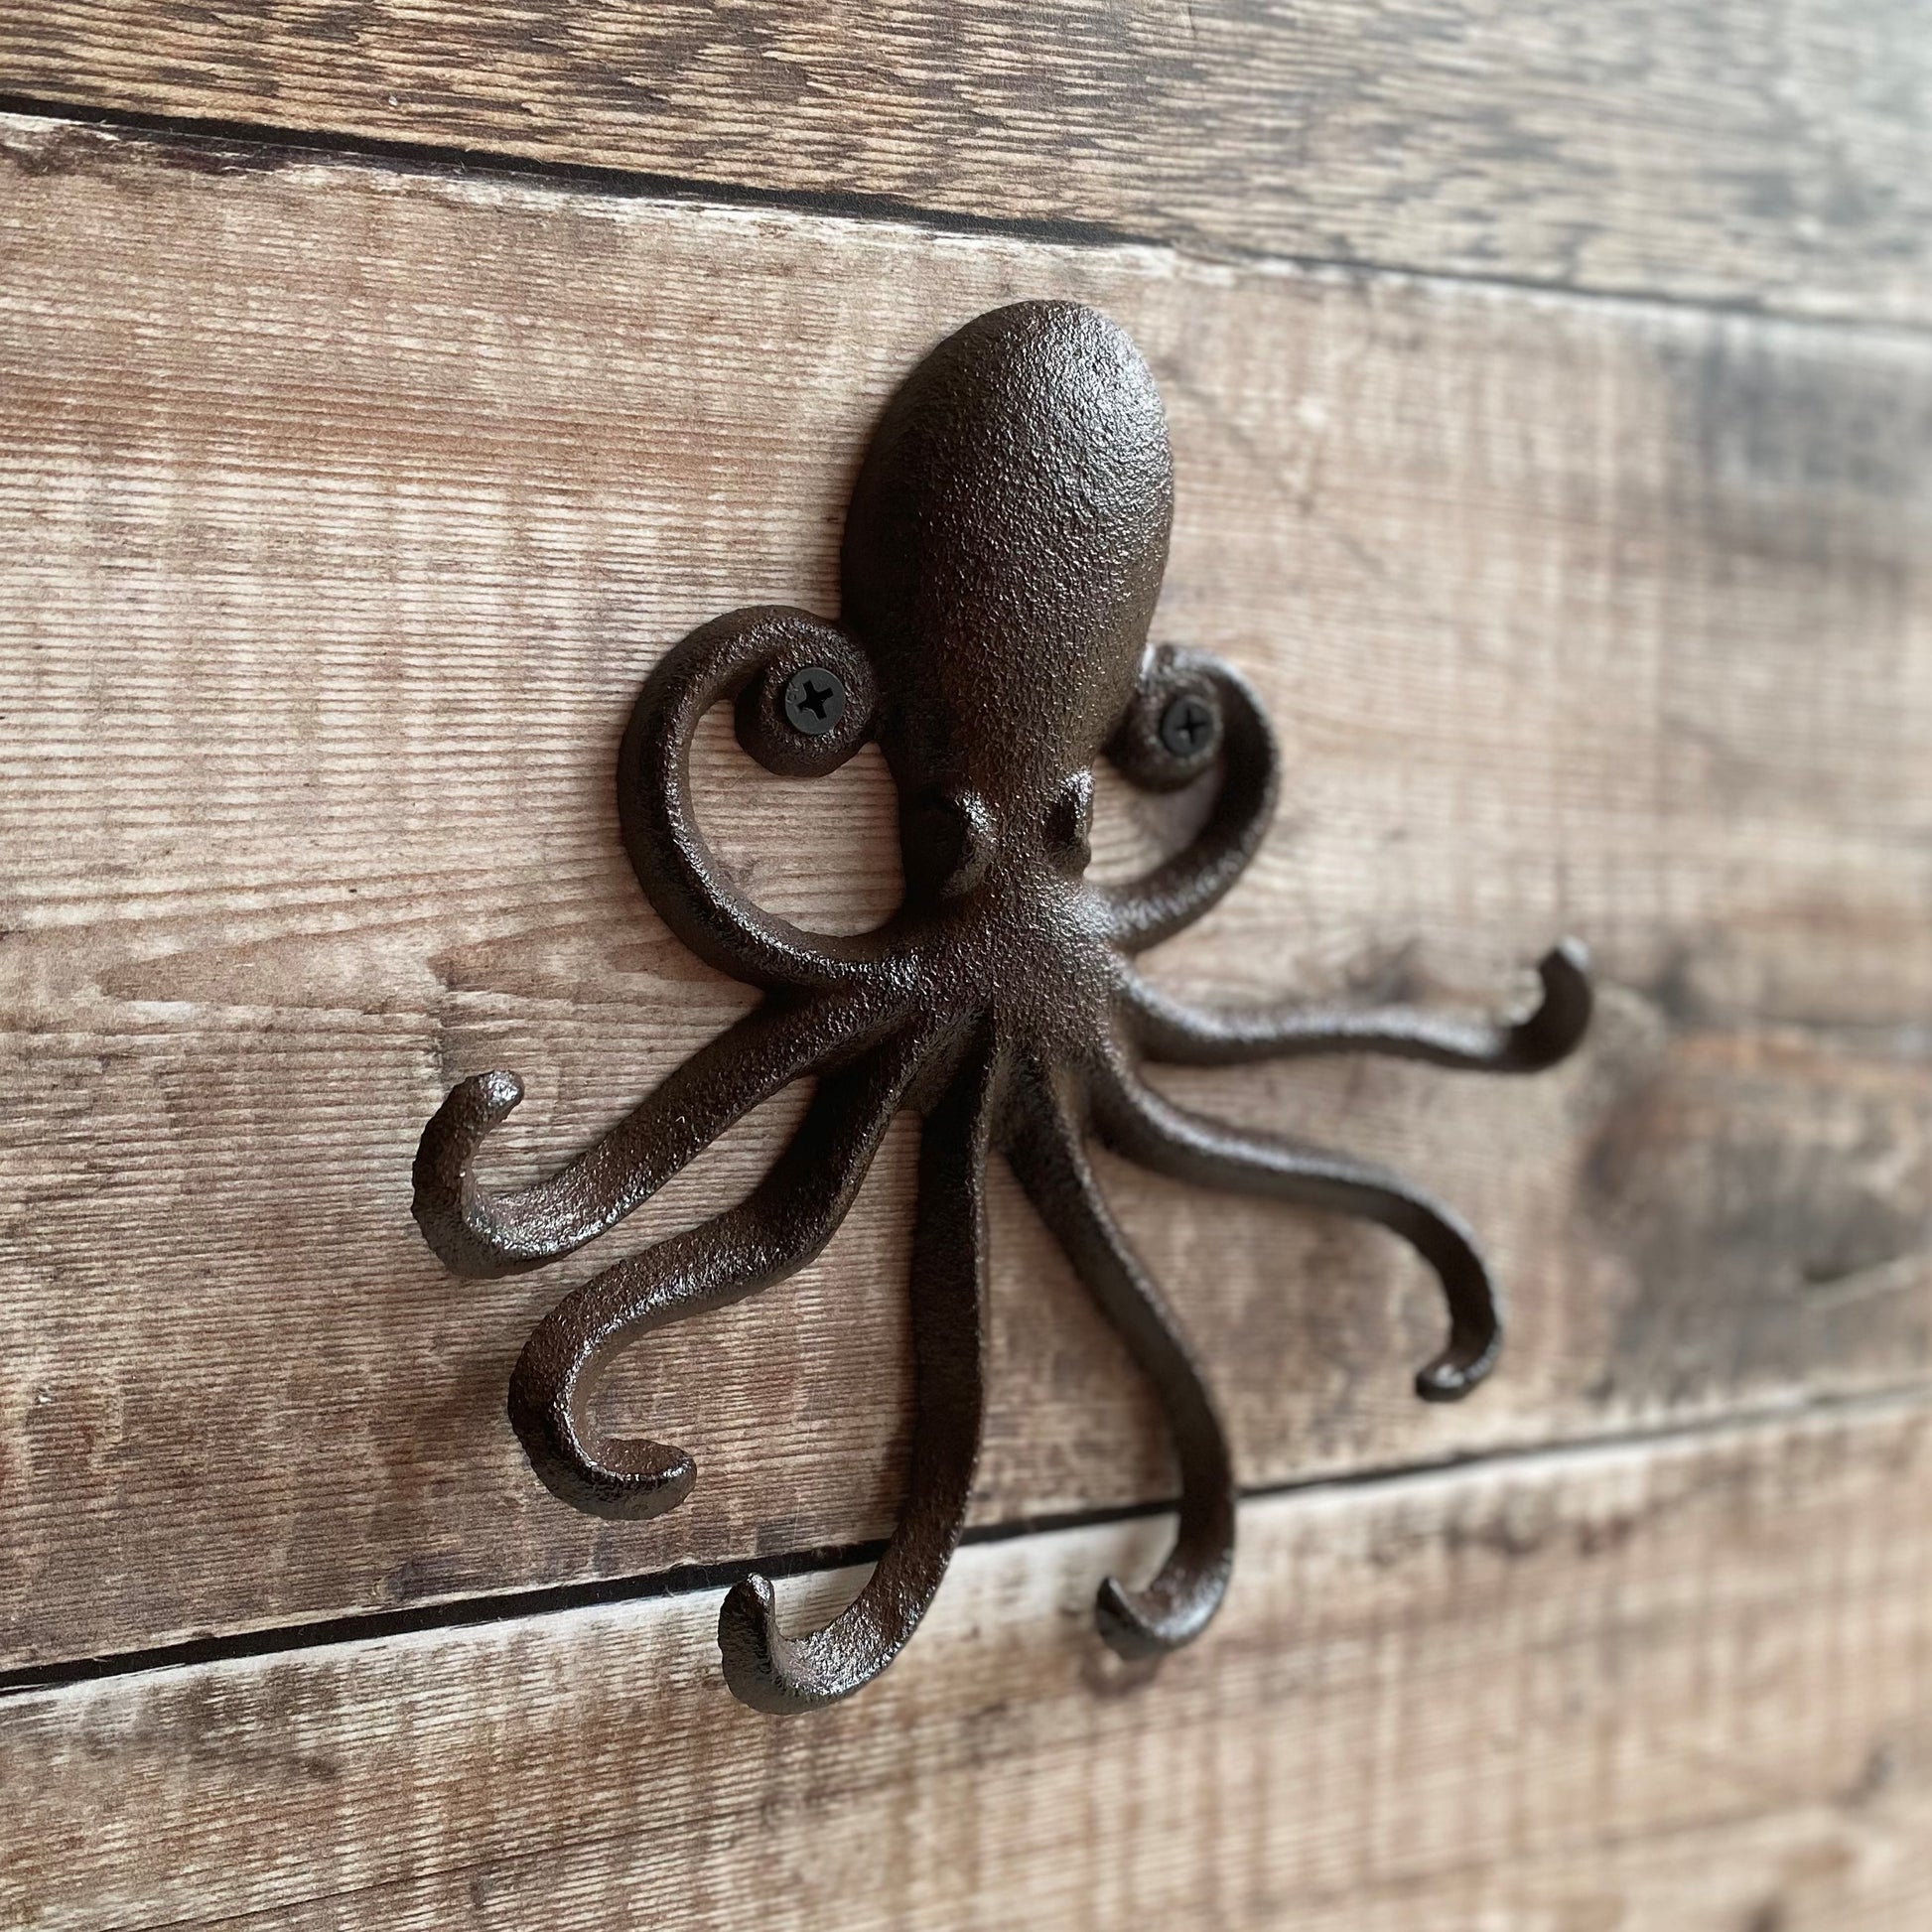 Octopus Wall Hook Cast Iron 